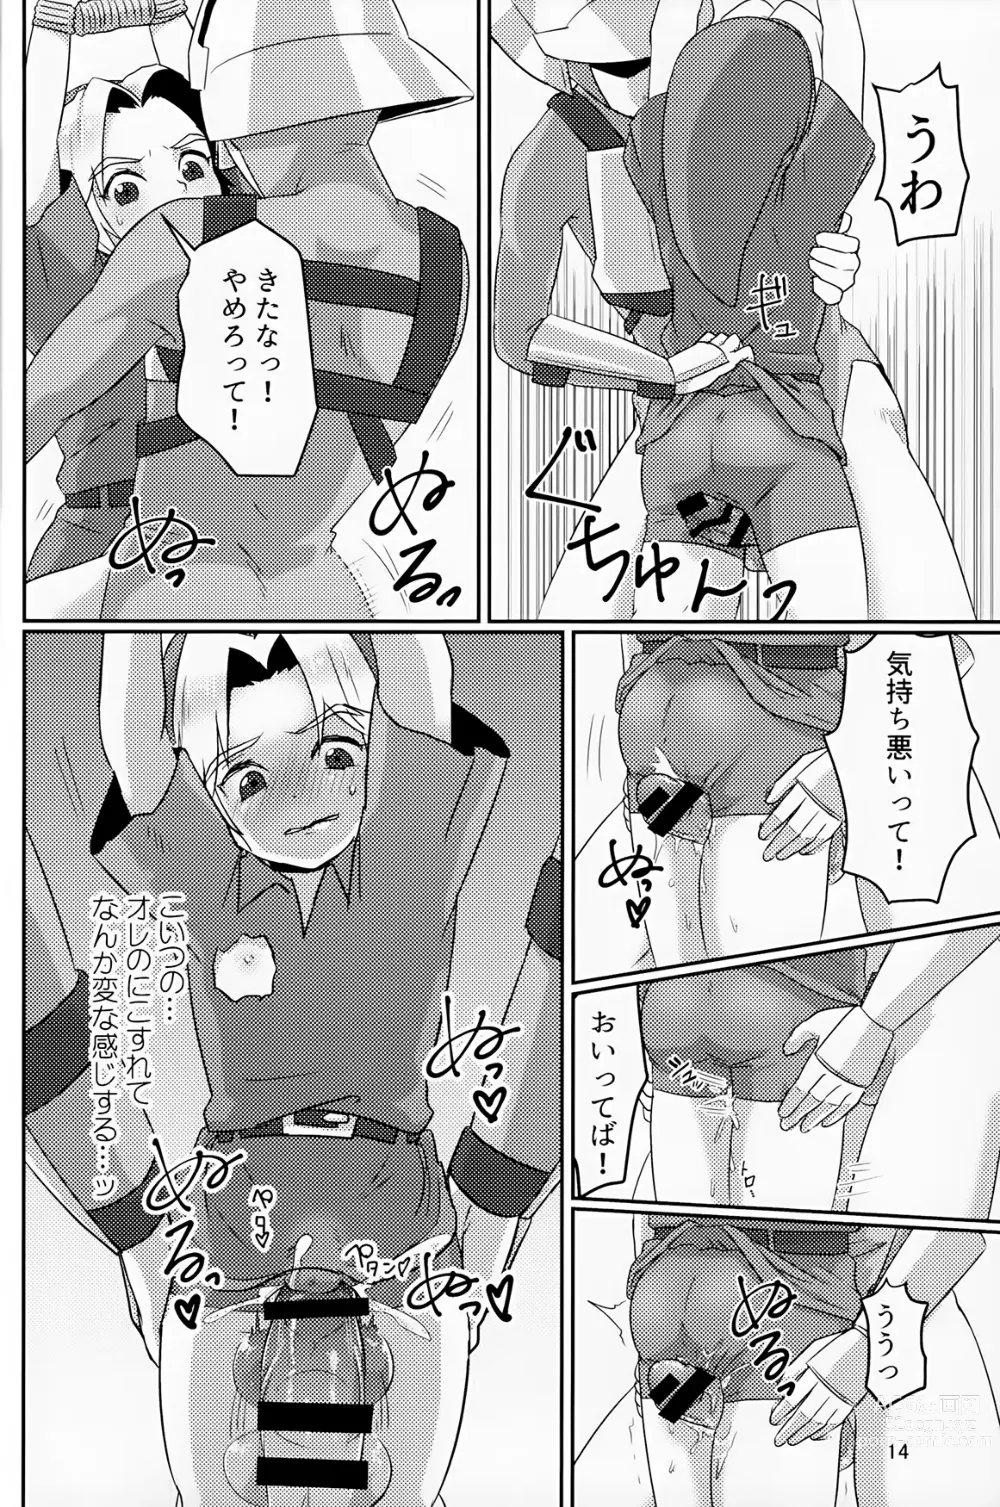 Page 13 of doujinshi Oi soko no kozō tomare!!